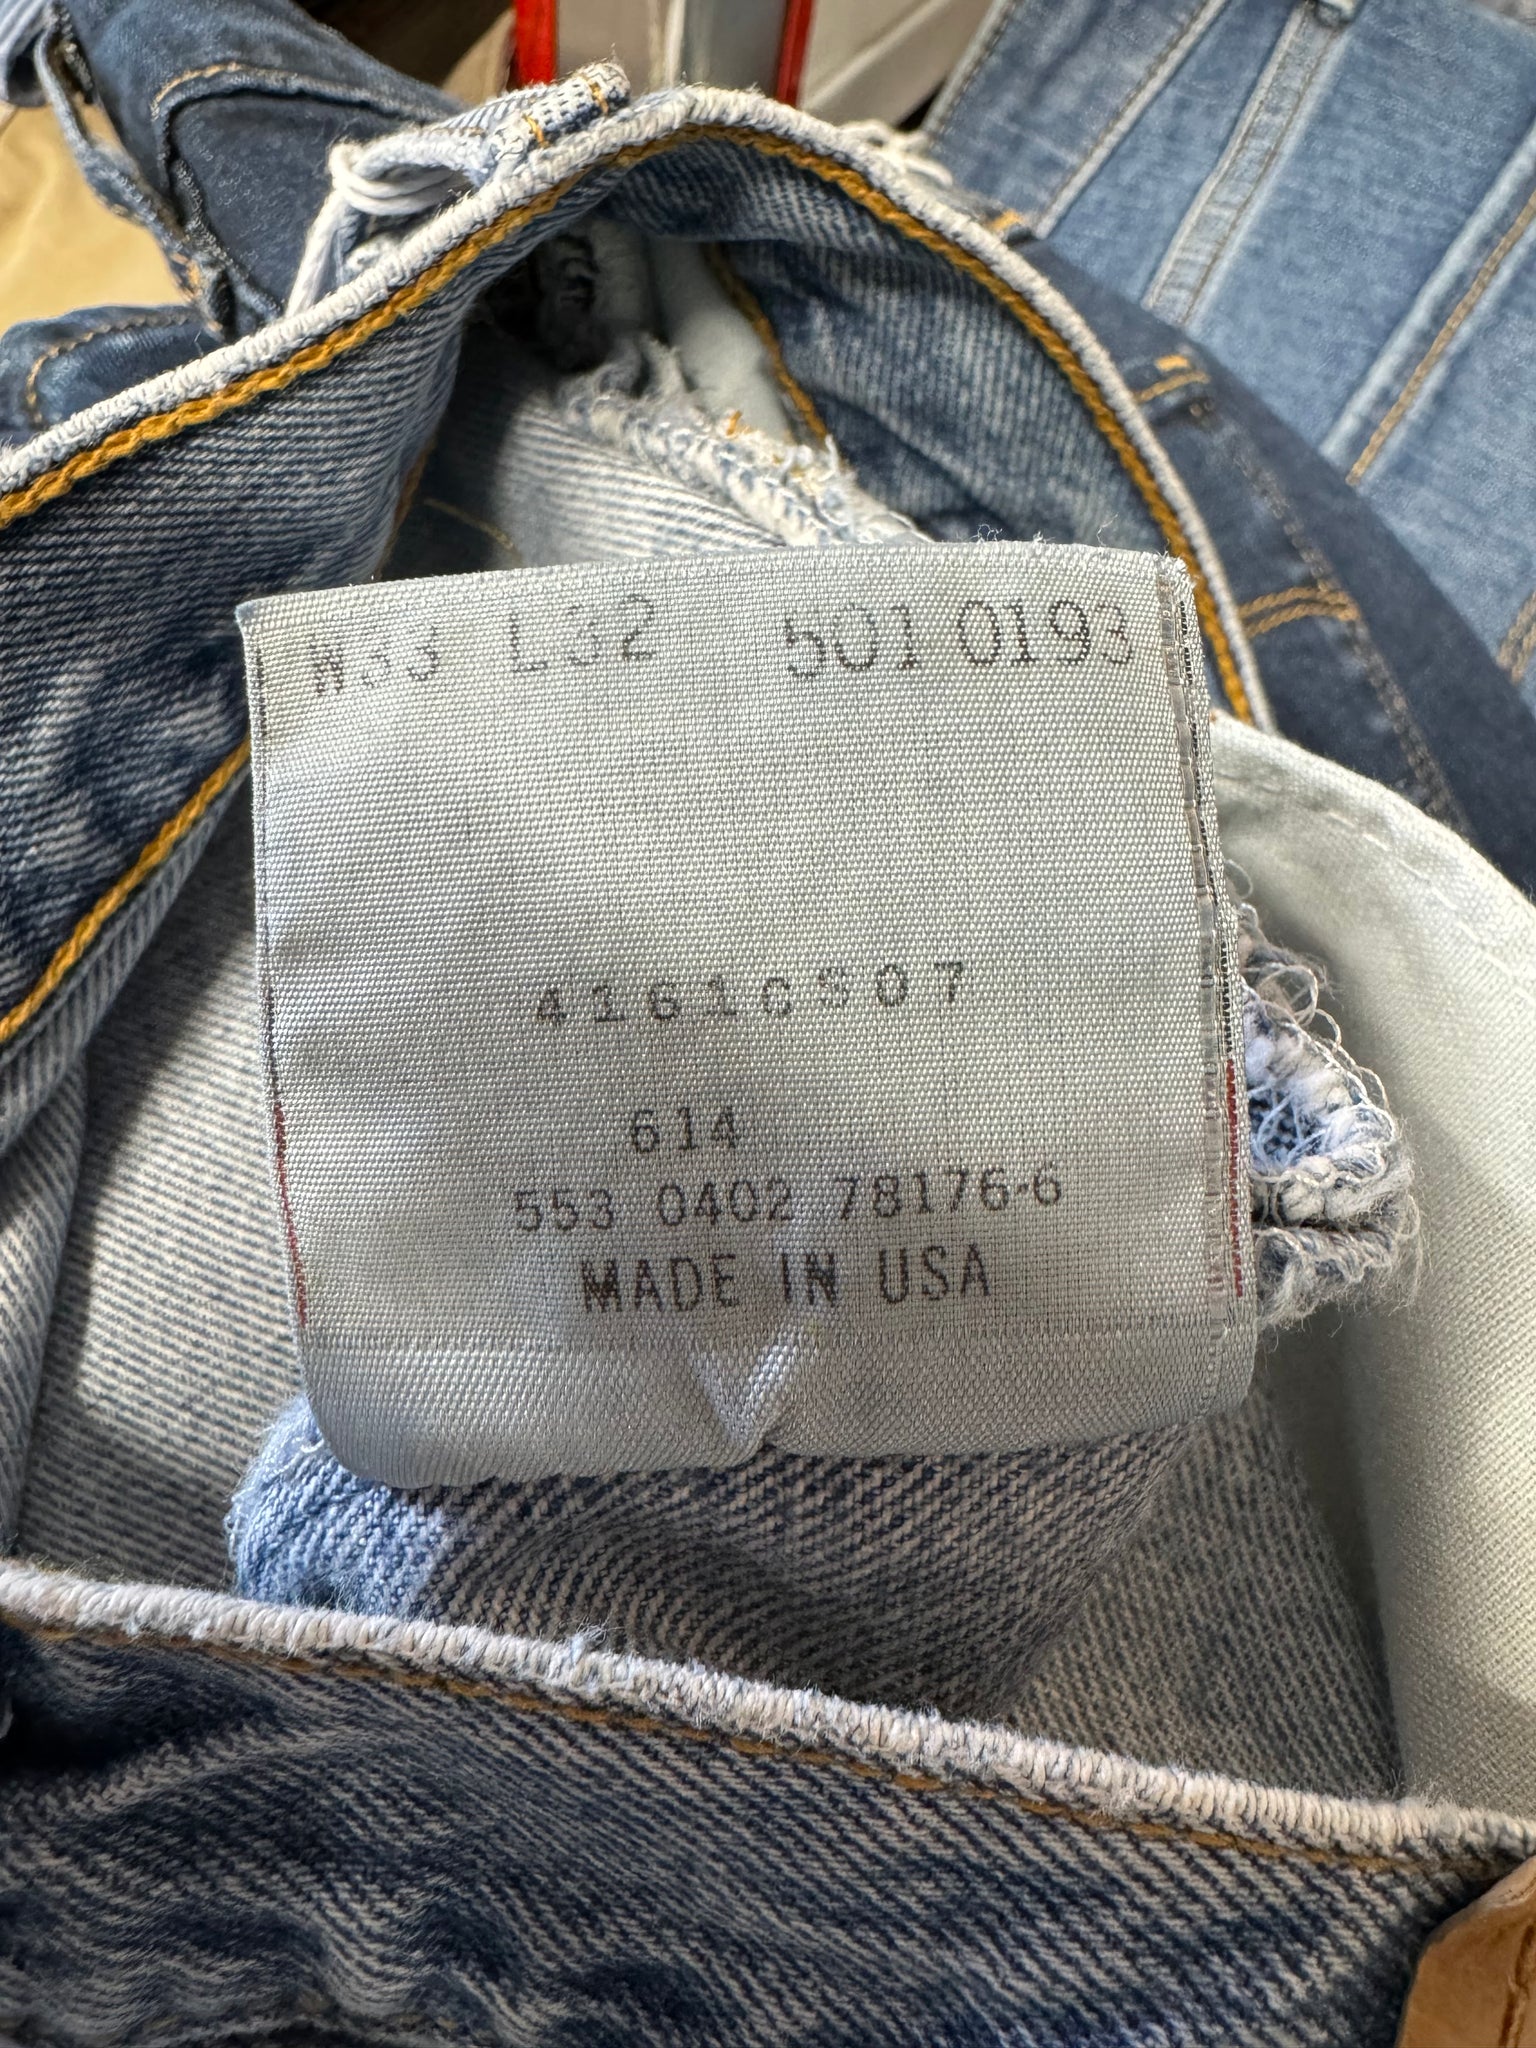 Vintage USA Levi's 501 Premium Wash Denim Jeans (JYJ0324-108)